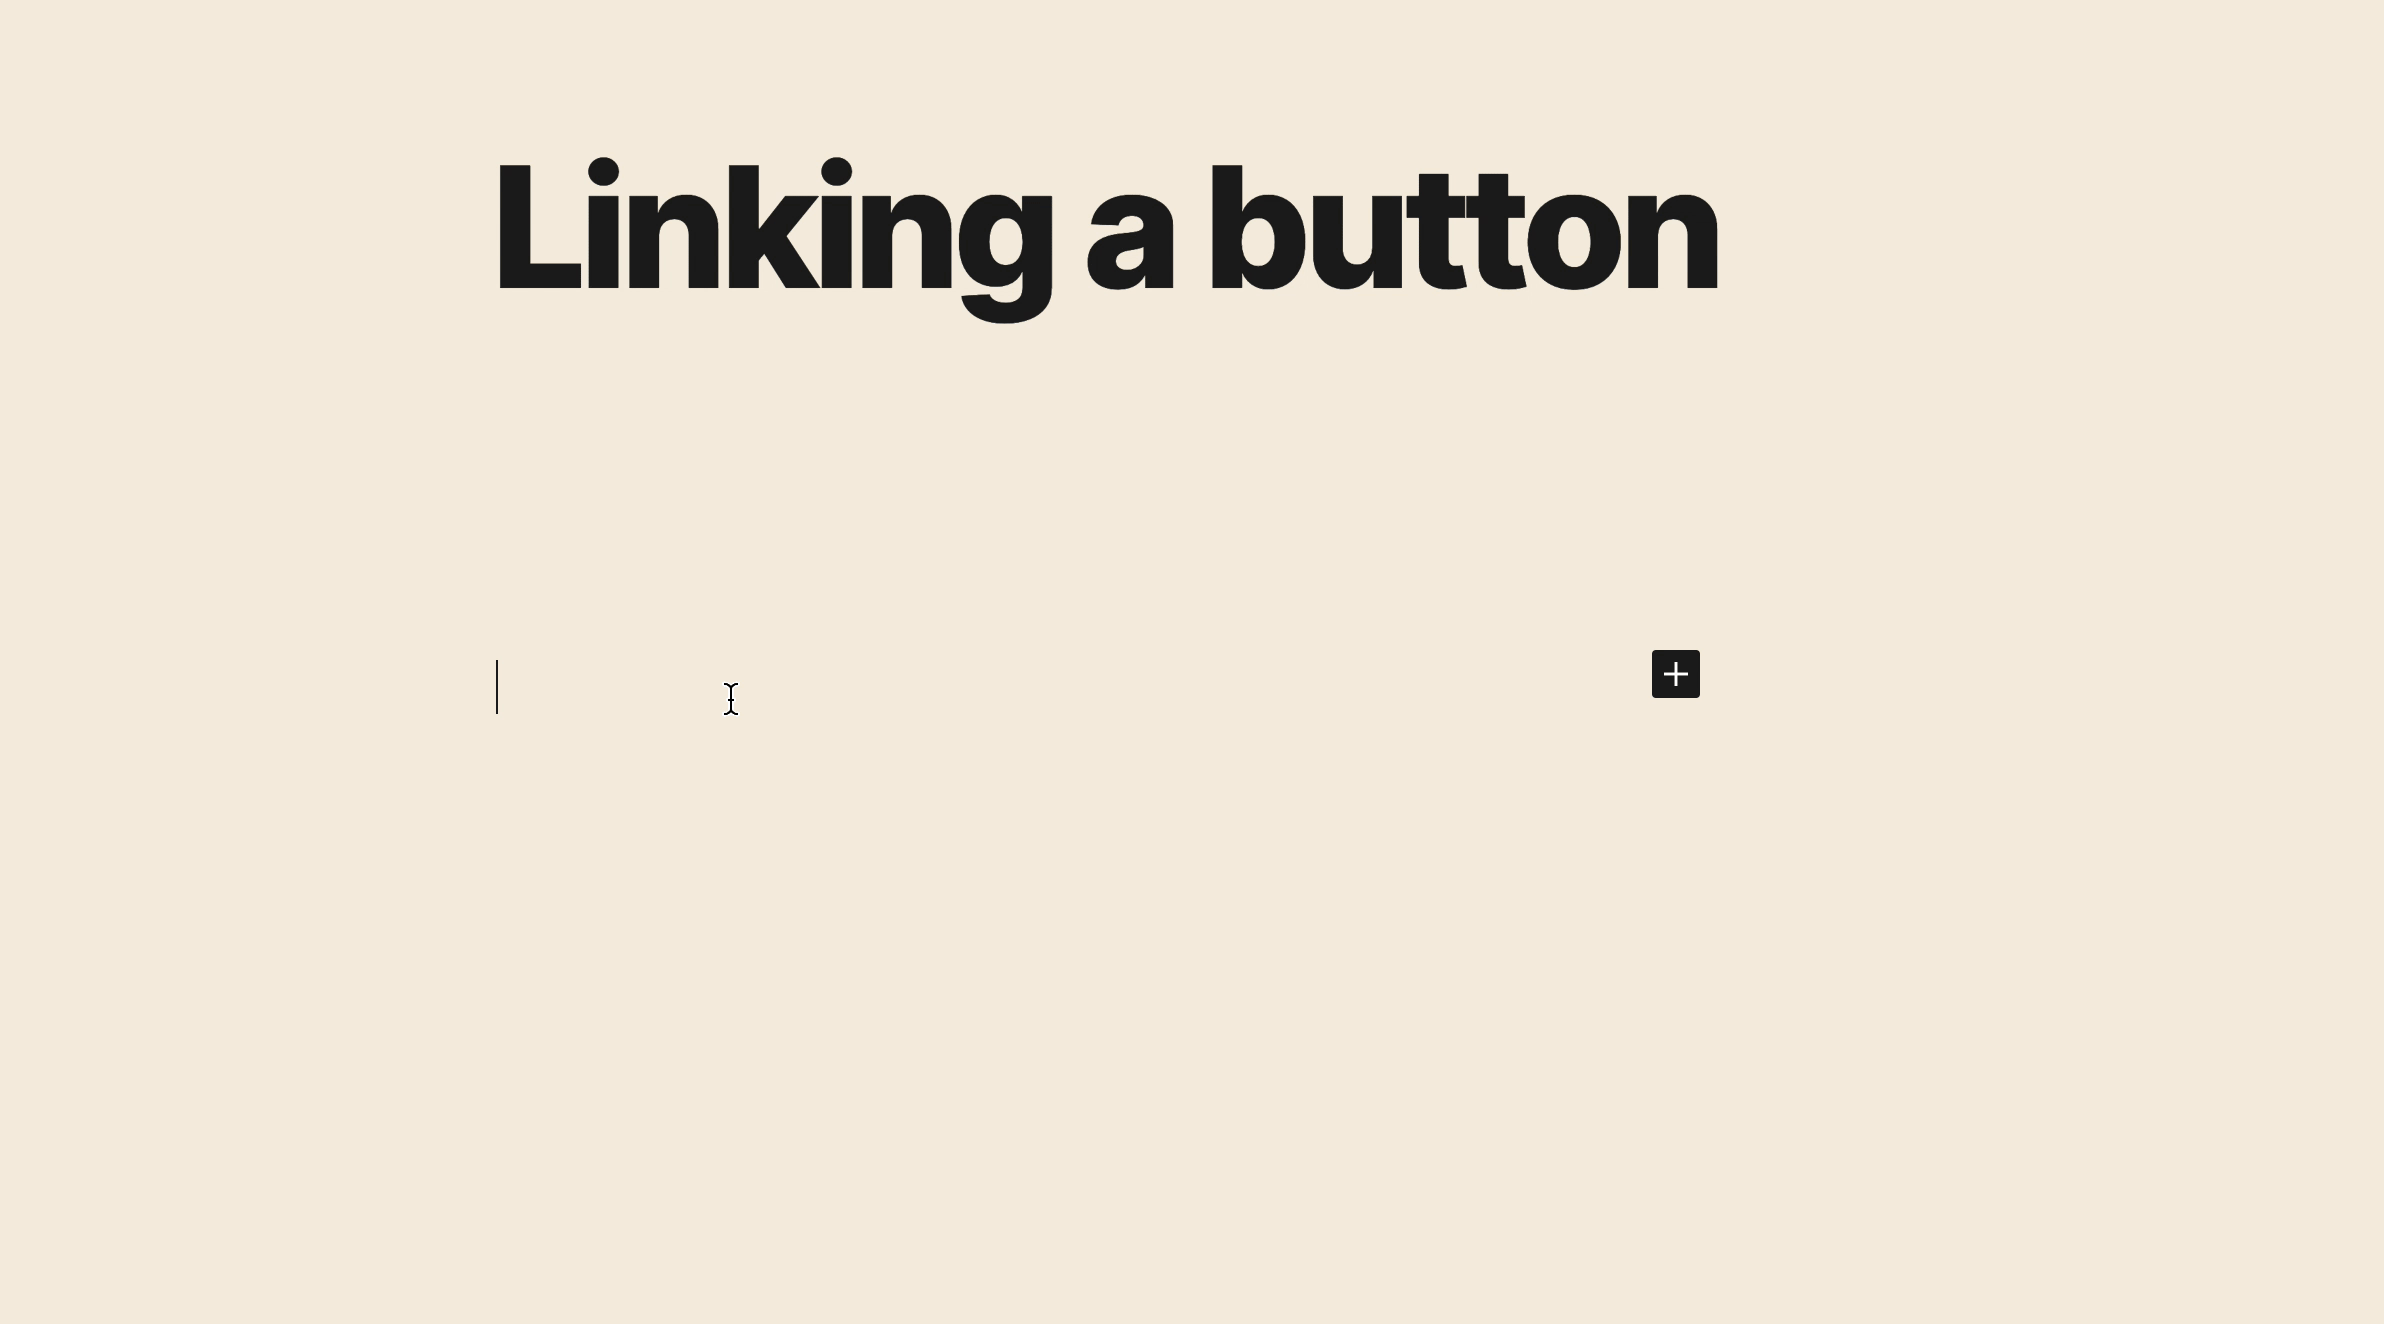 Linking a button